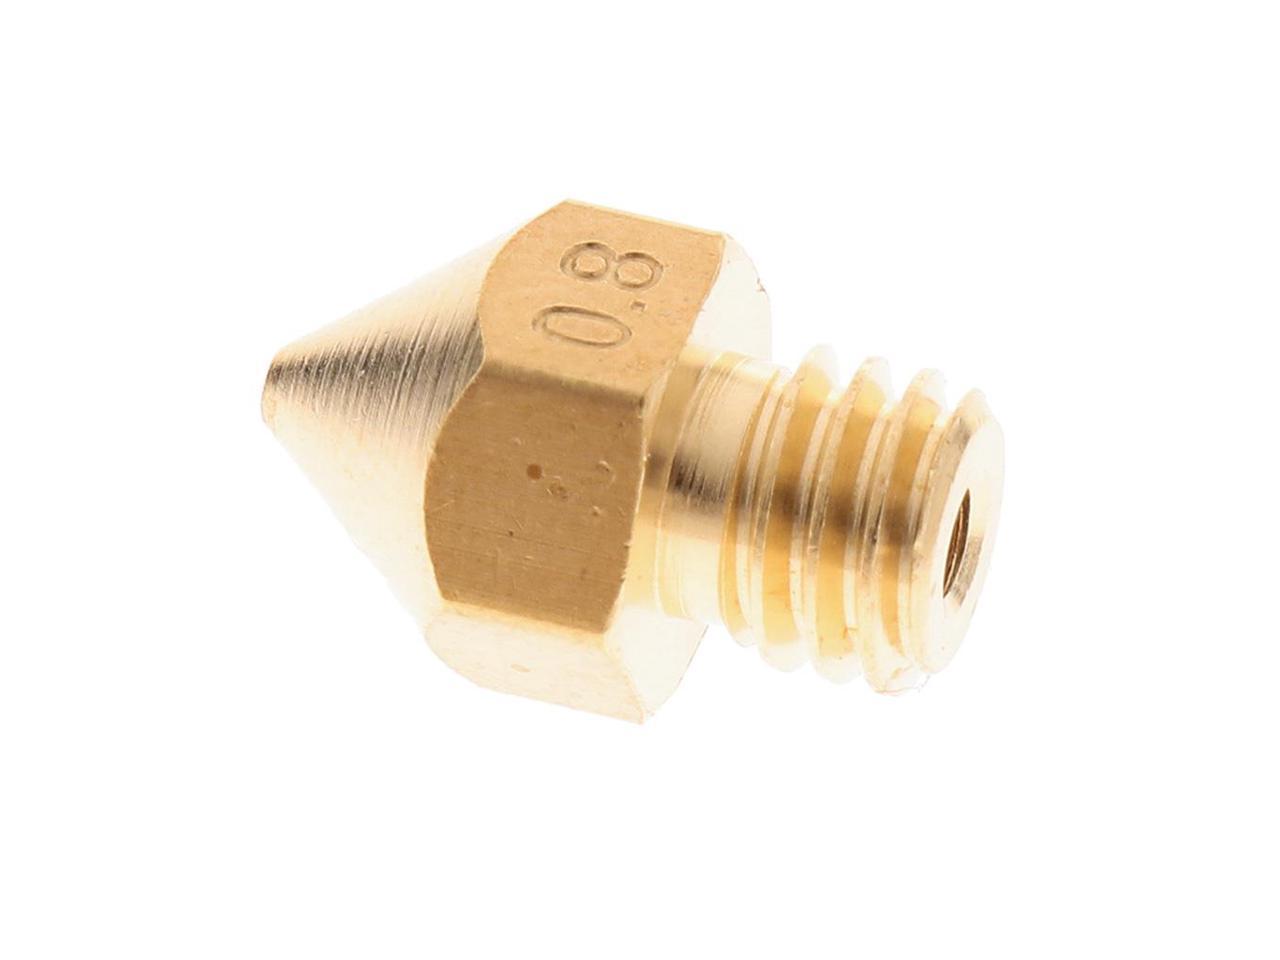 Brass Extruder Nozzle Print Head Printhead for 1.75mm Filament 3D Printer 0.8mm